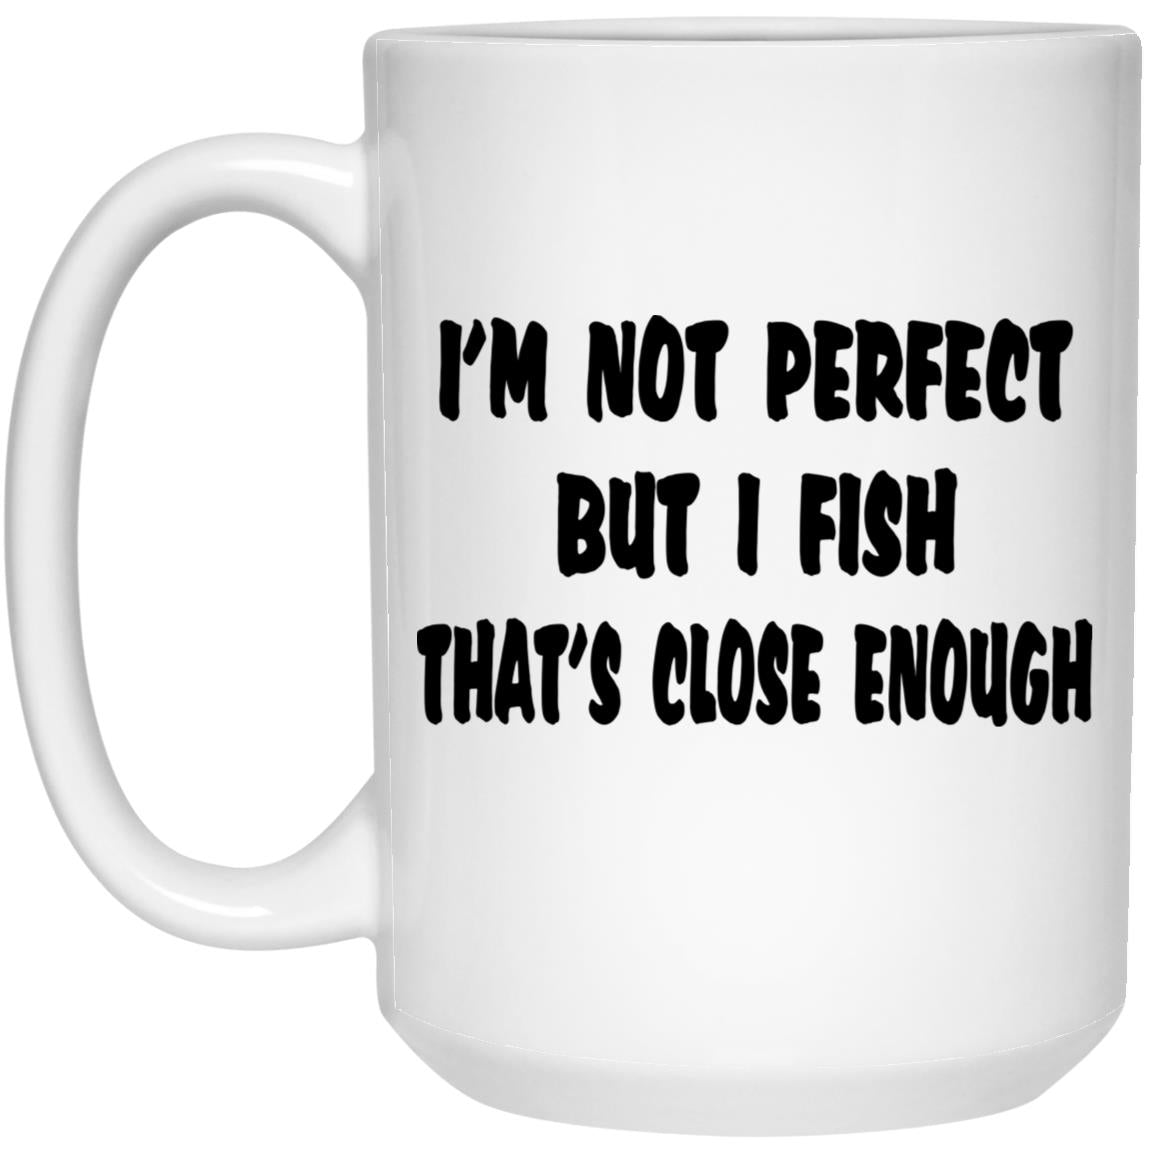 I'm not perfect but I fish that's close enough b 15 oz white mug